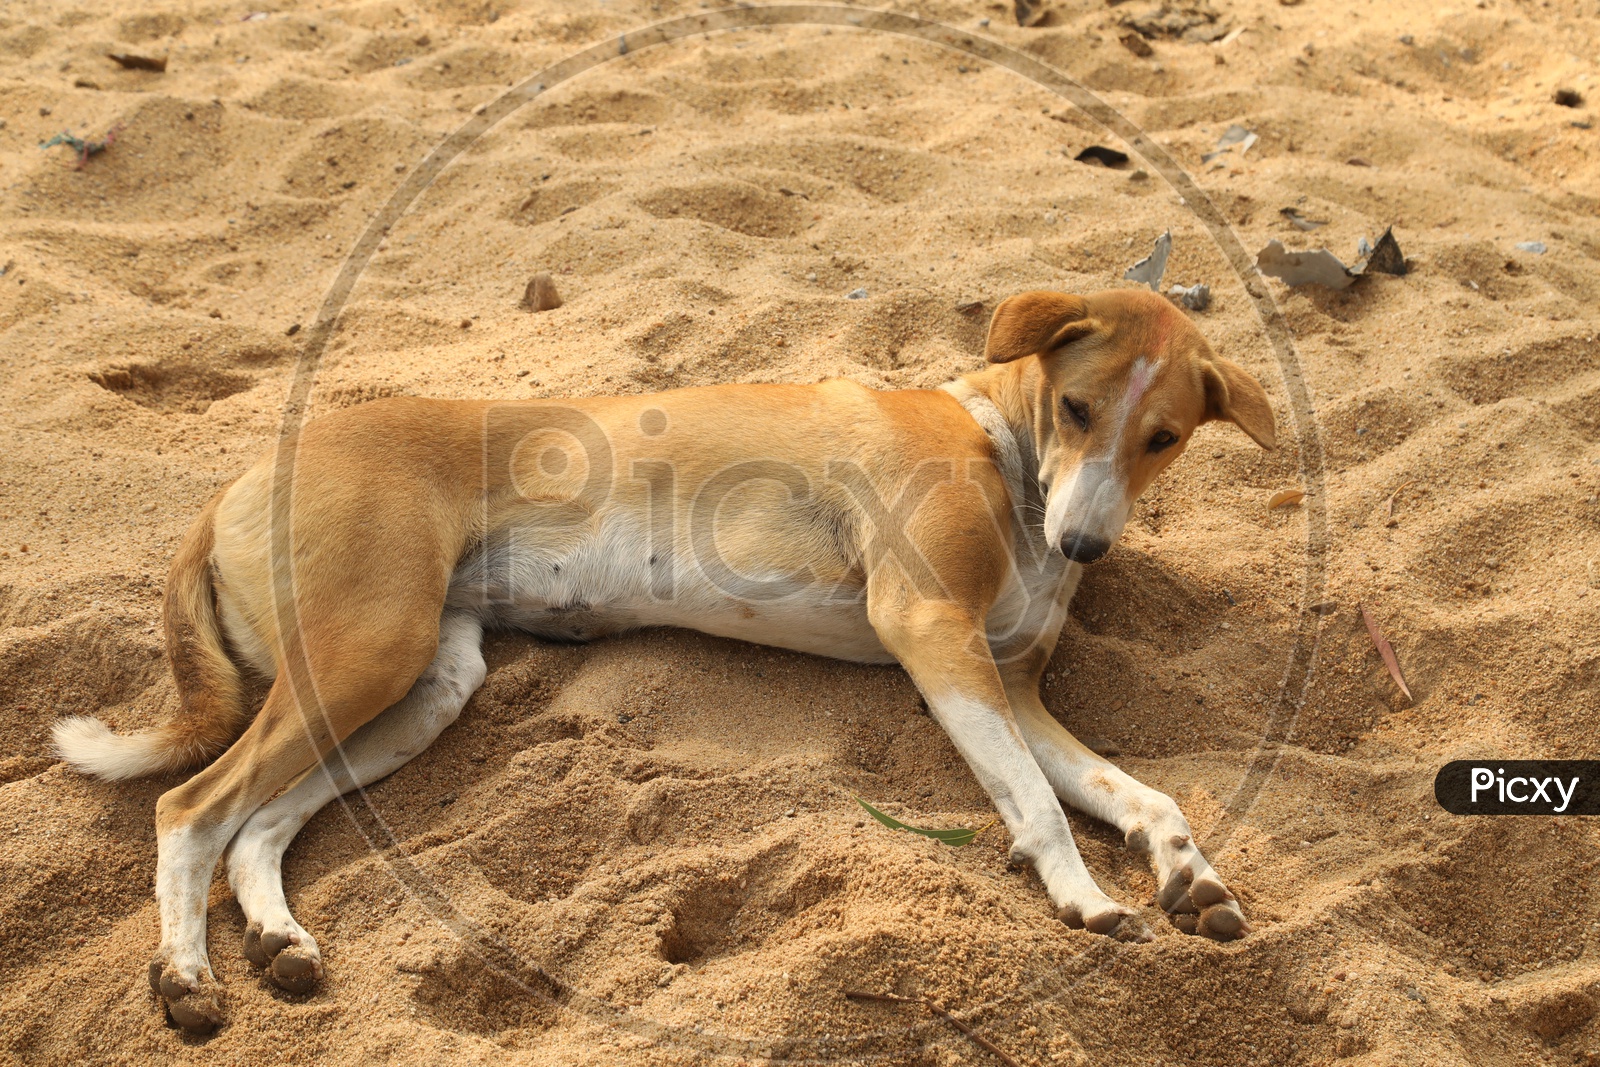 A street dog lying on the sand